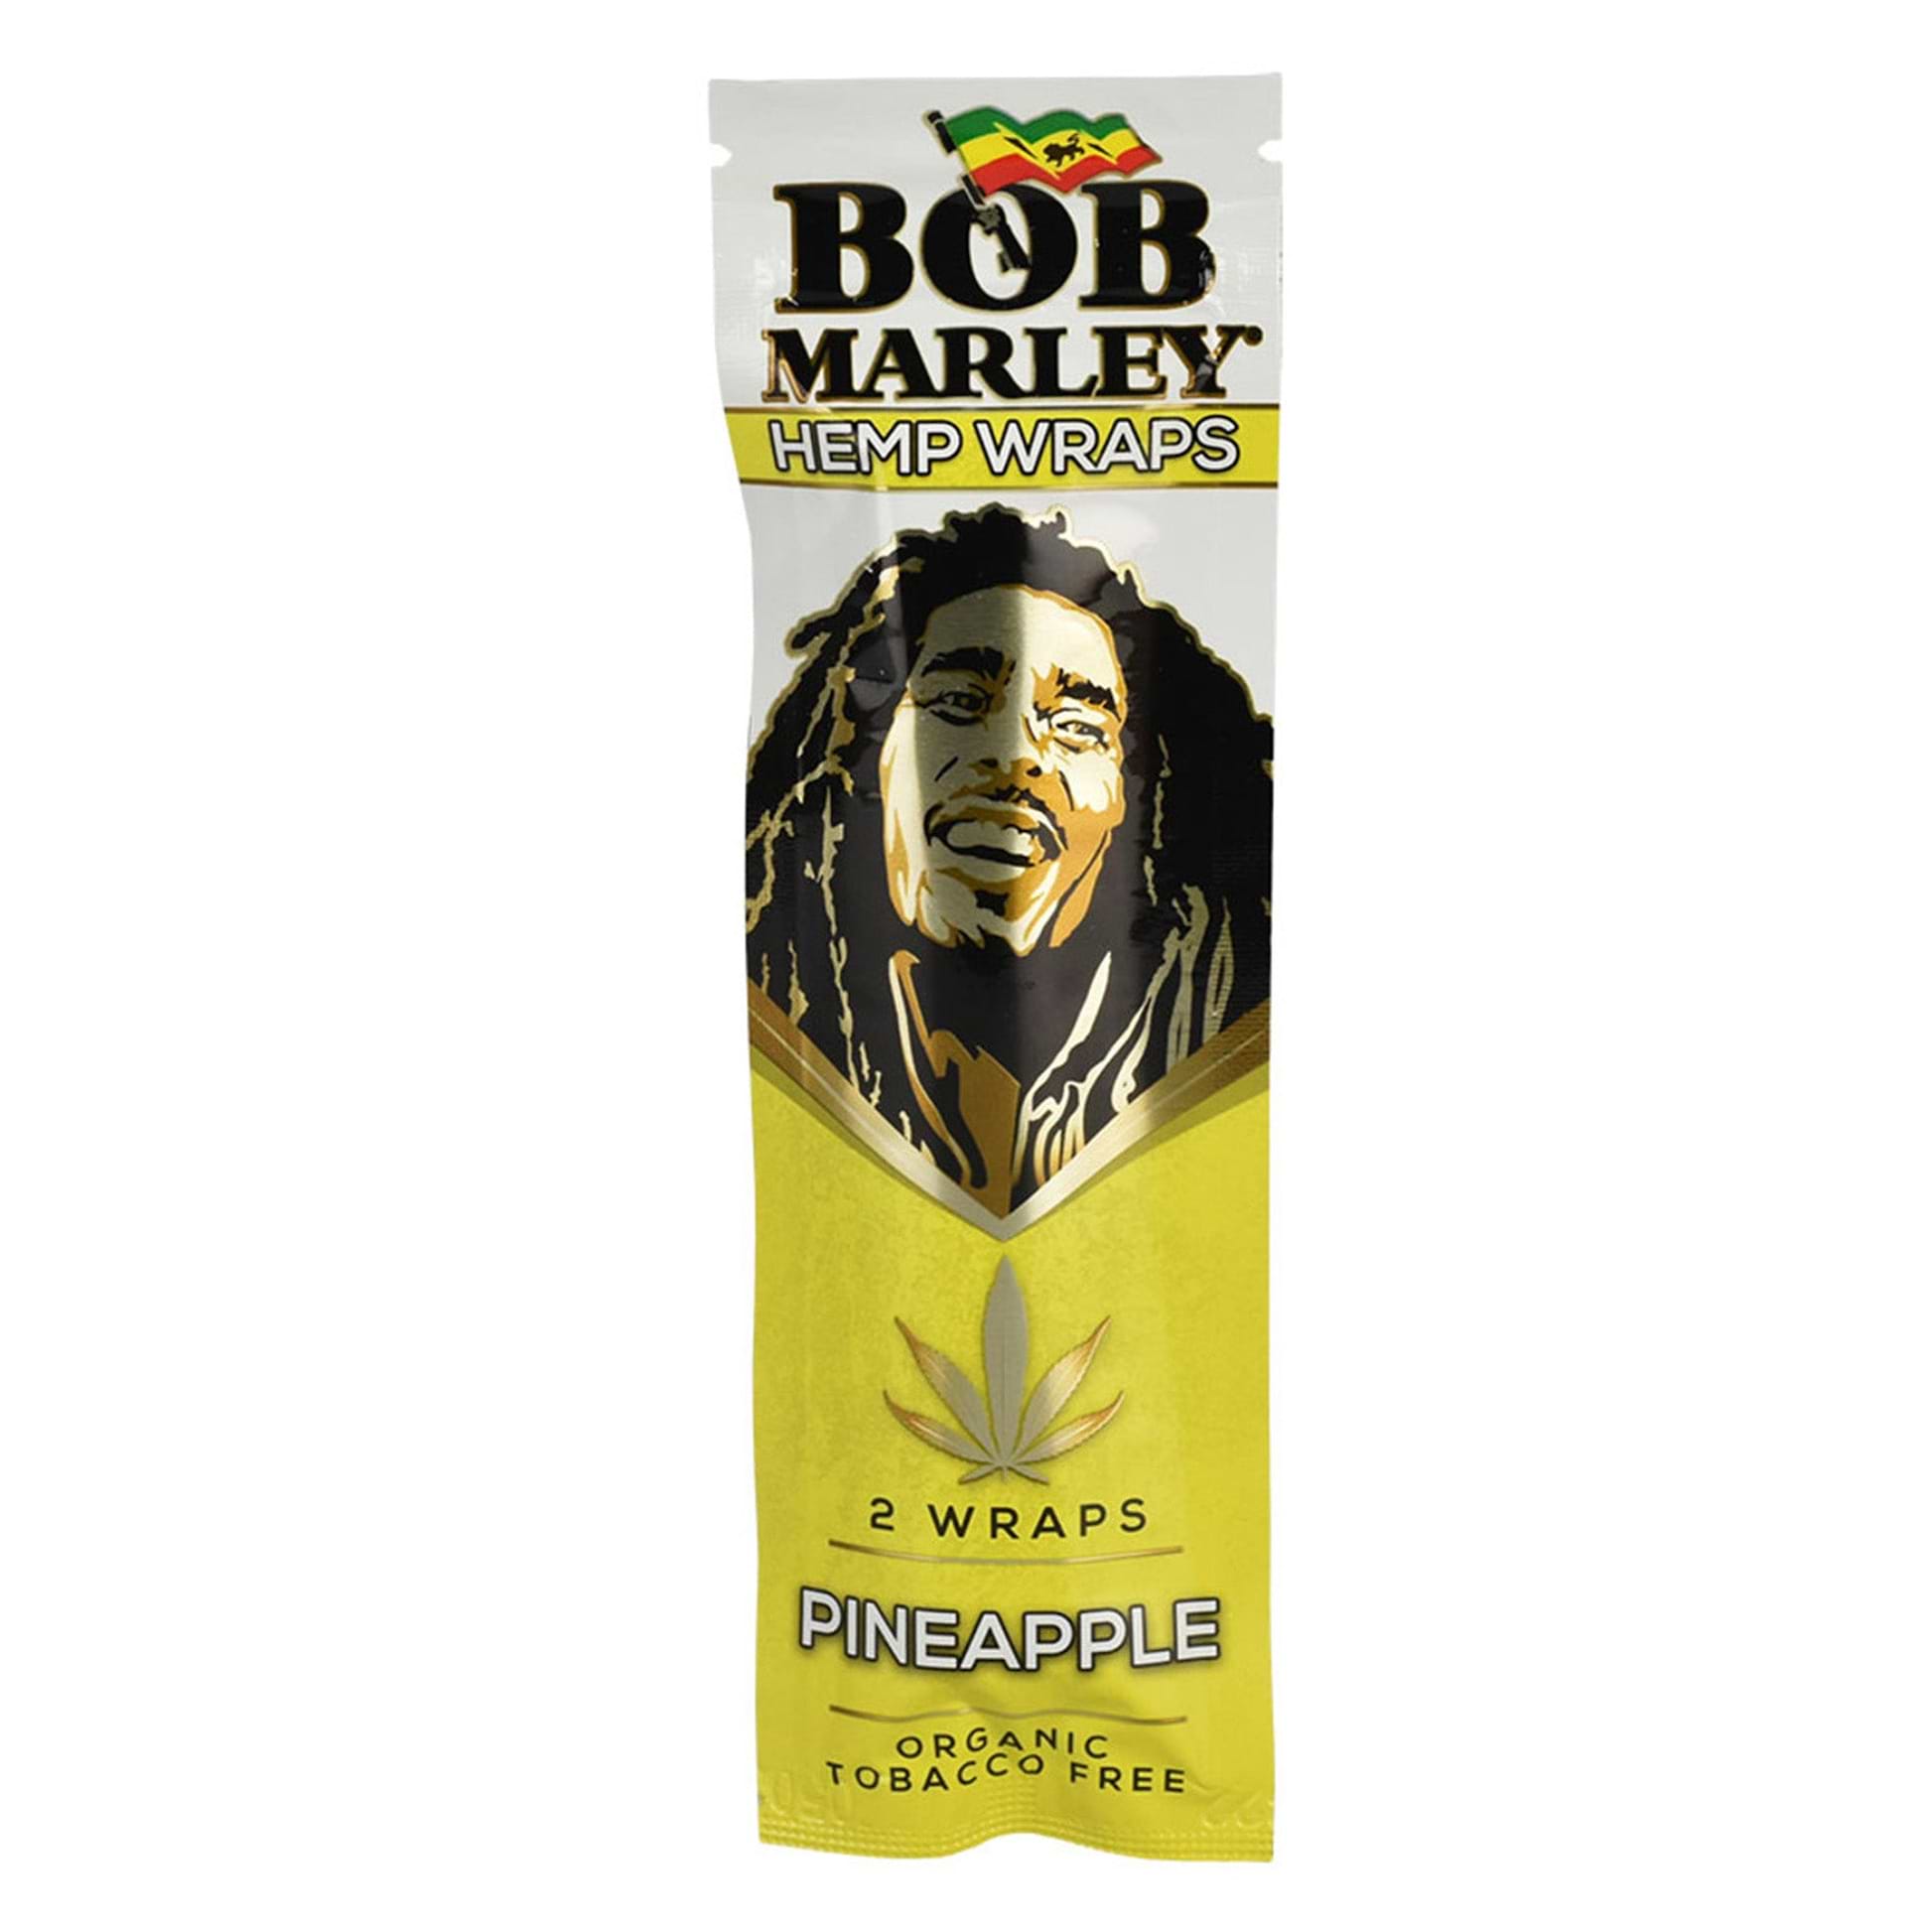 Bob Marley Hemp Wraps Pineapple